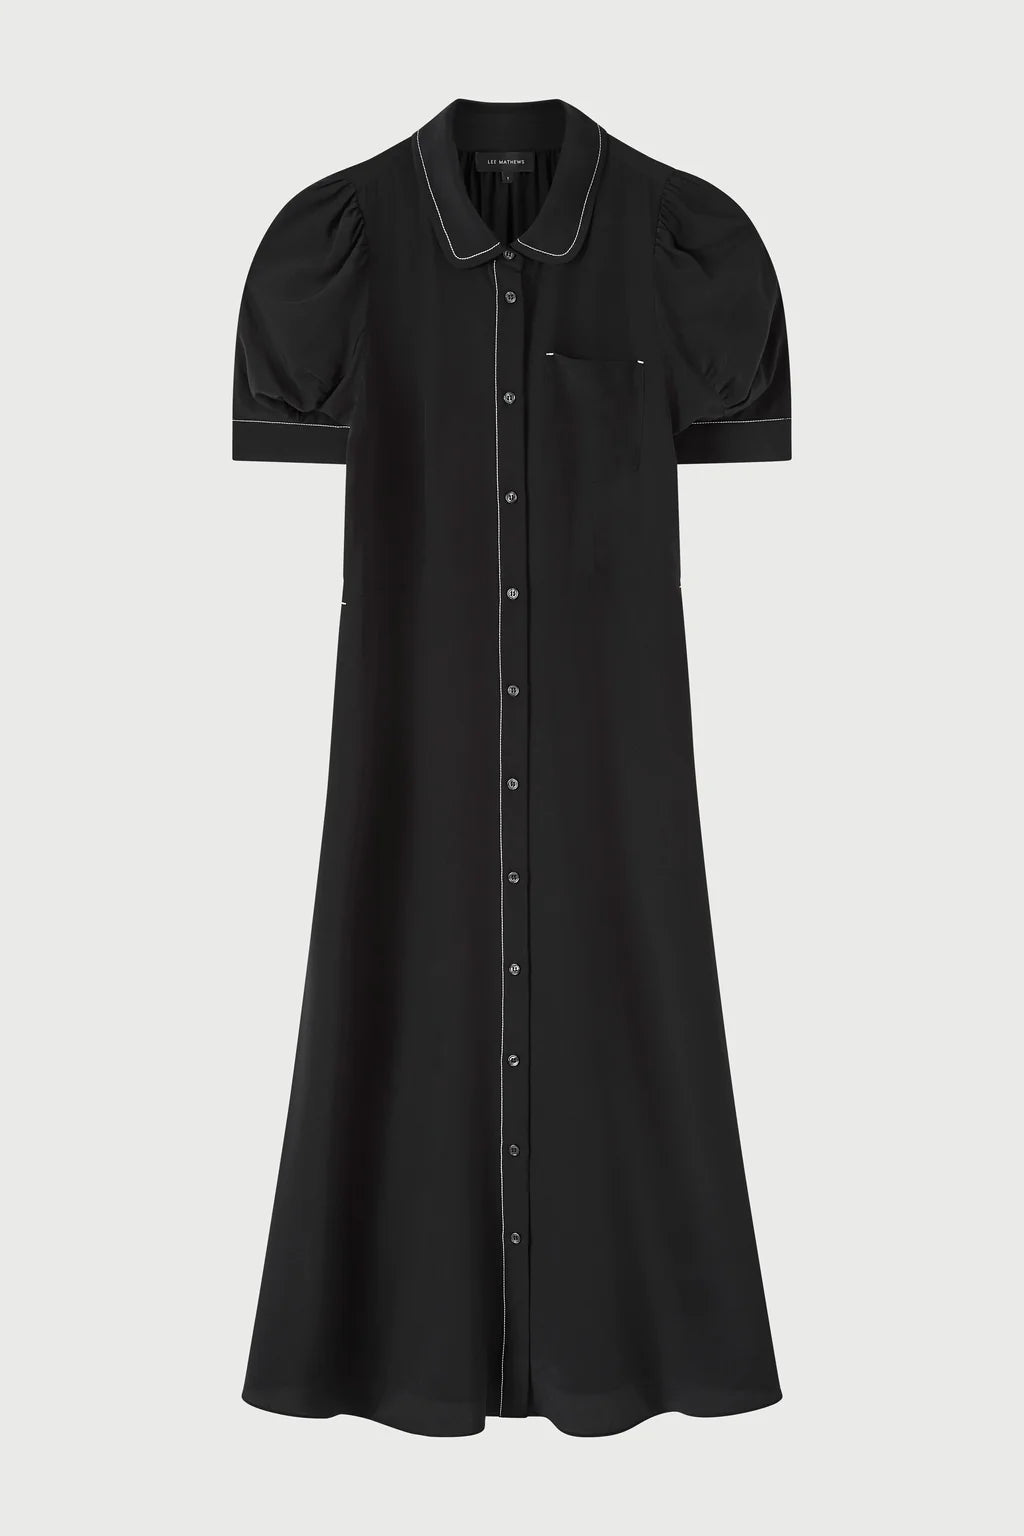 Lee Mathews Cassini Short Sleeve Dress - Black